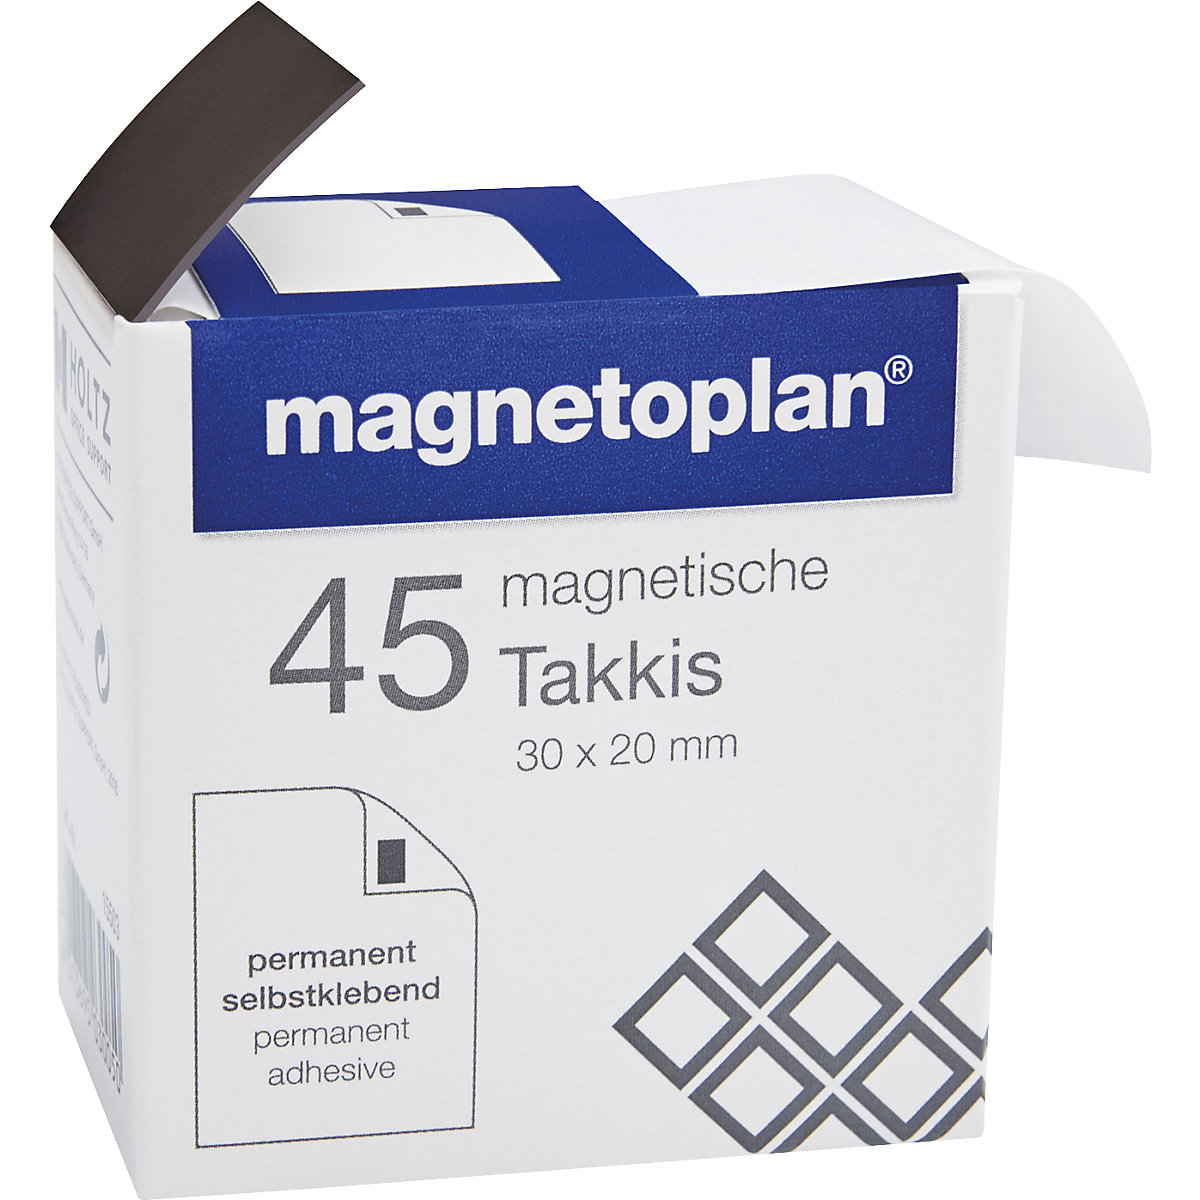 Angoli adesivi magnetici – magnetoplan: lungh. x largh. 30 x 20 mm